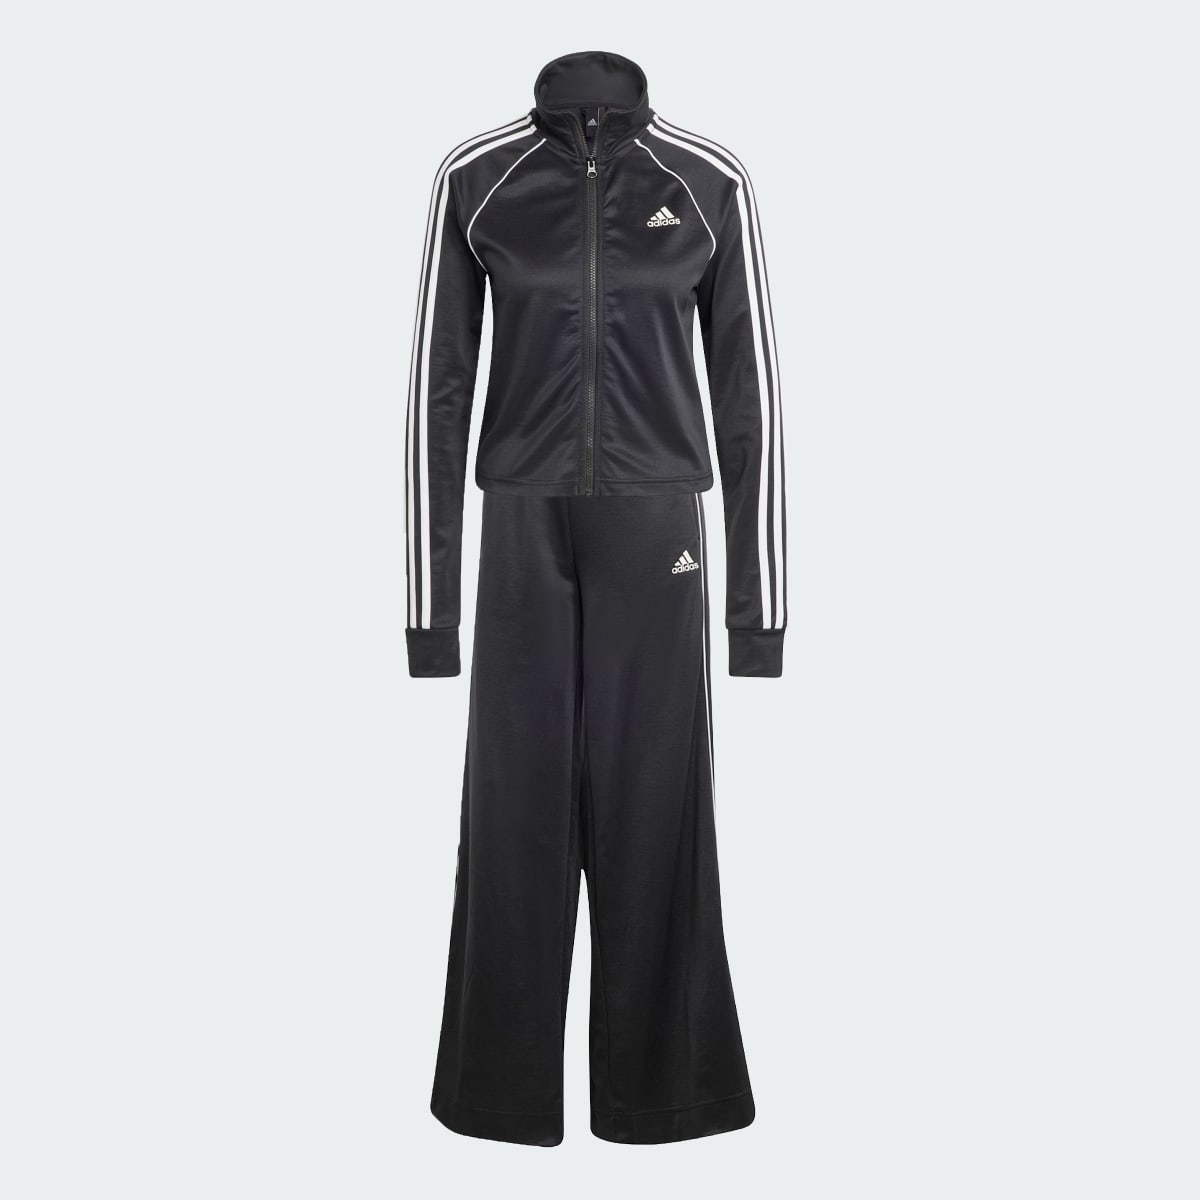 Adidas Track suit Teamsport. 5